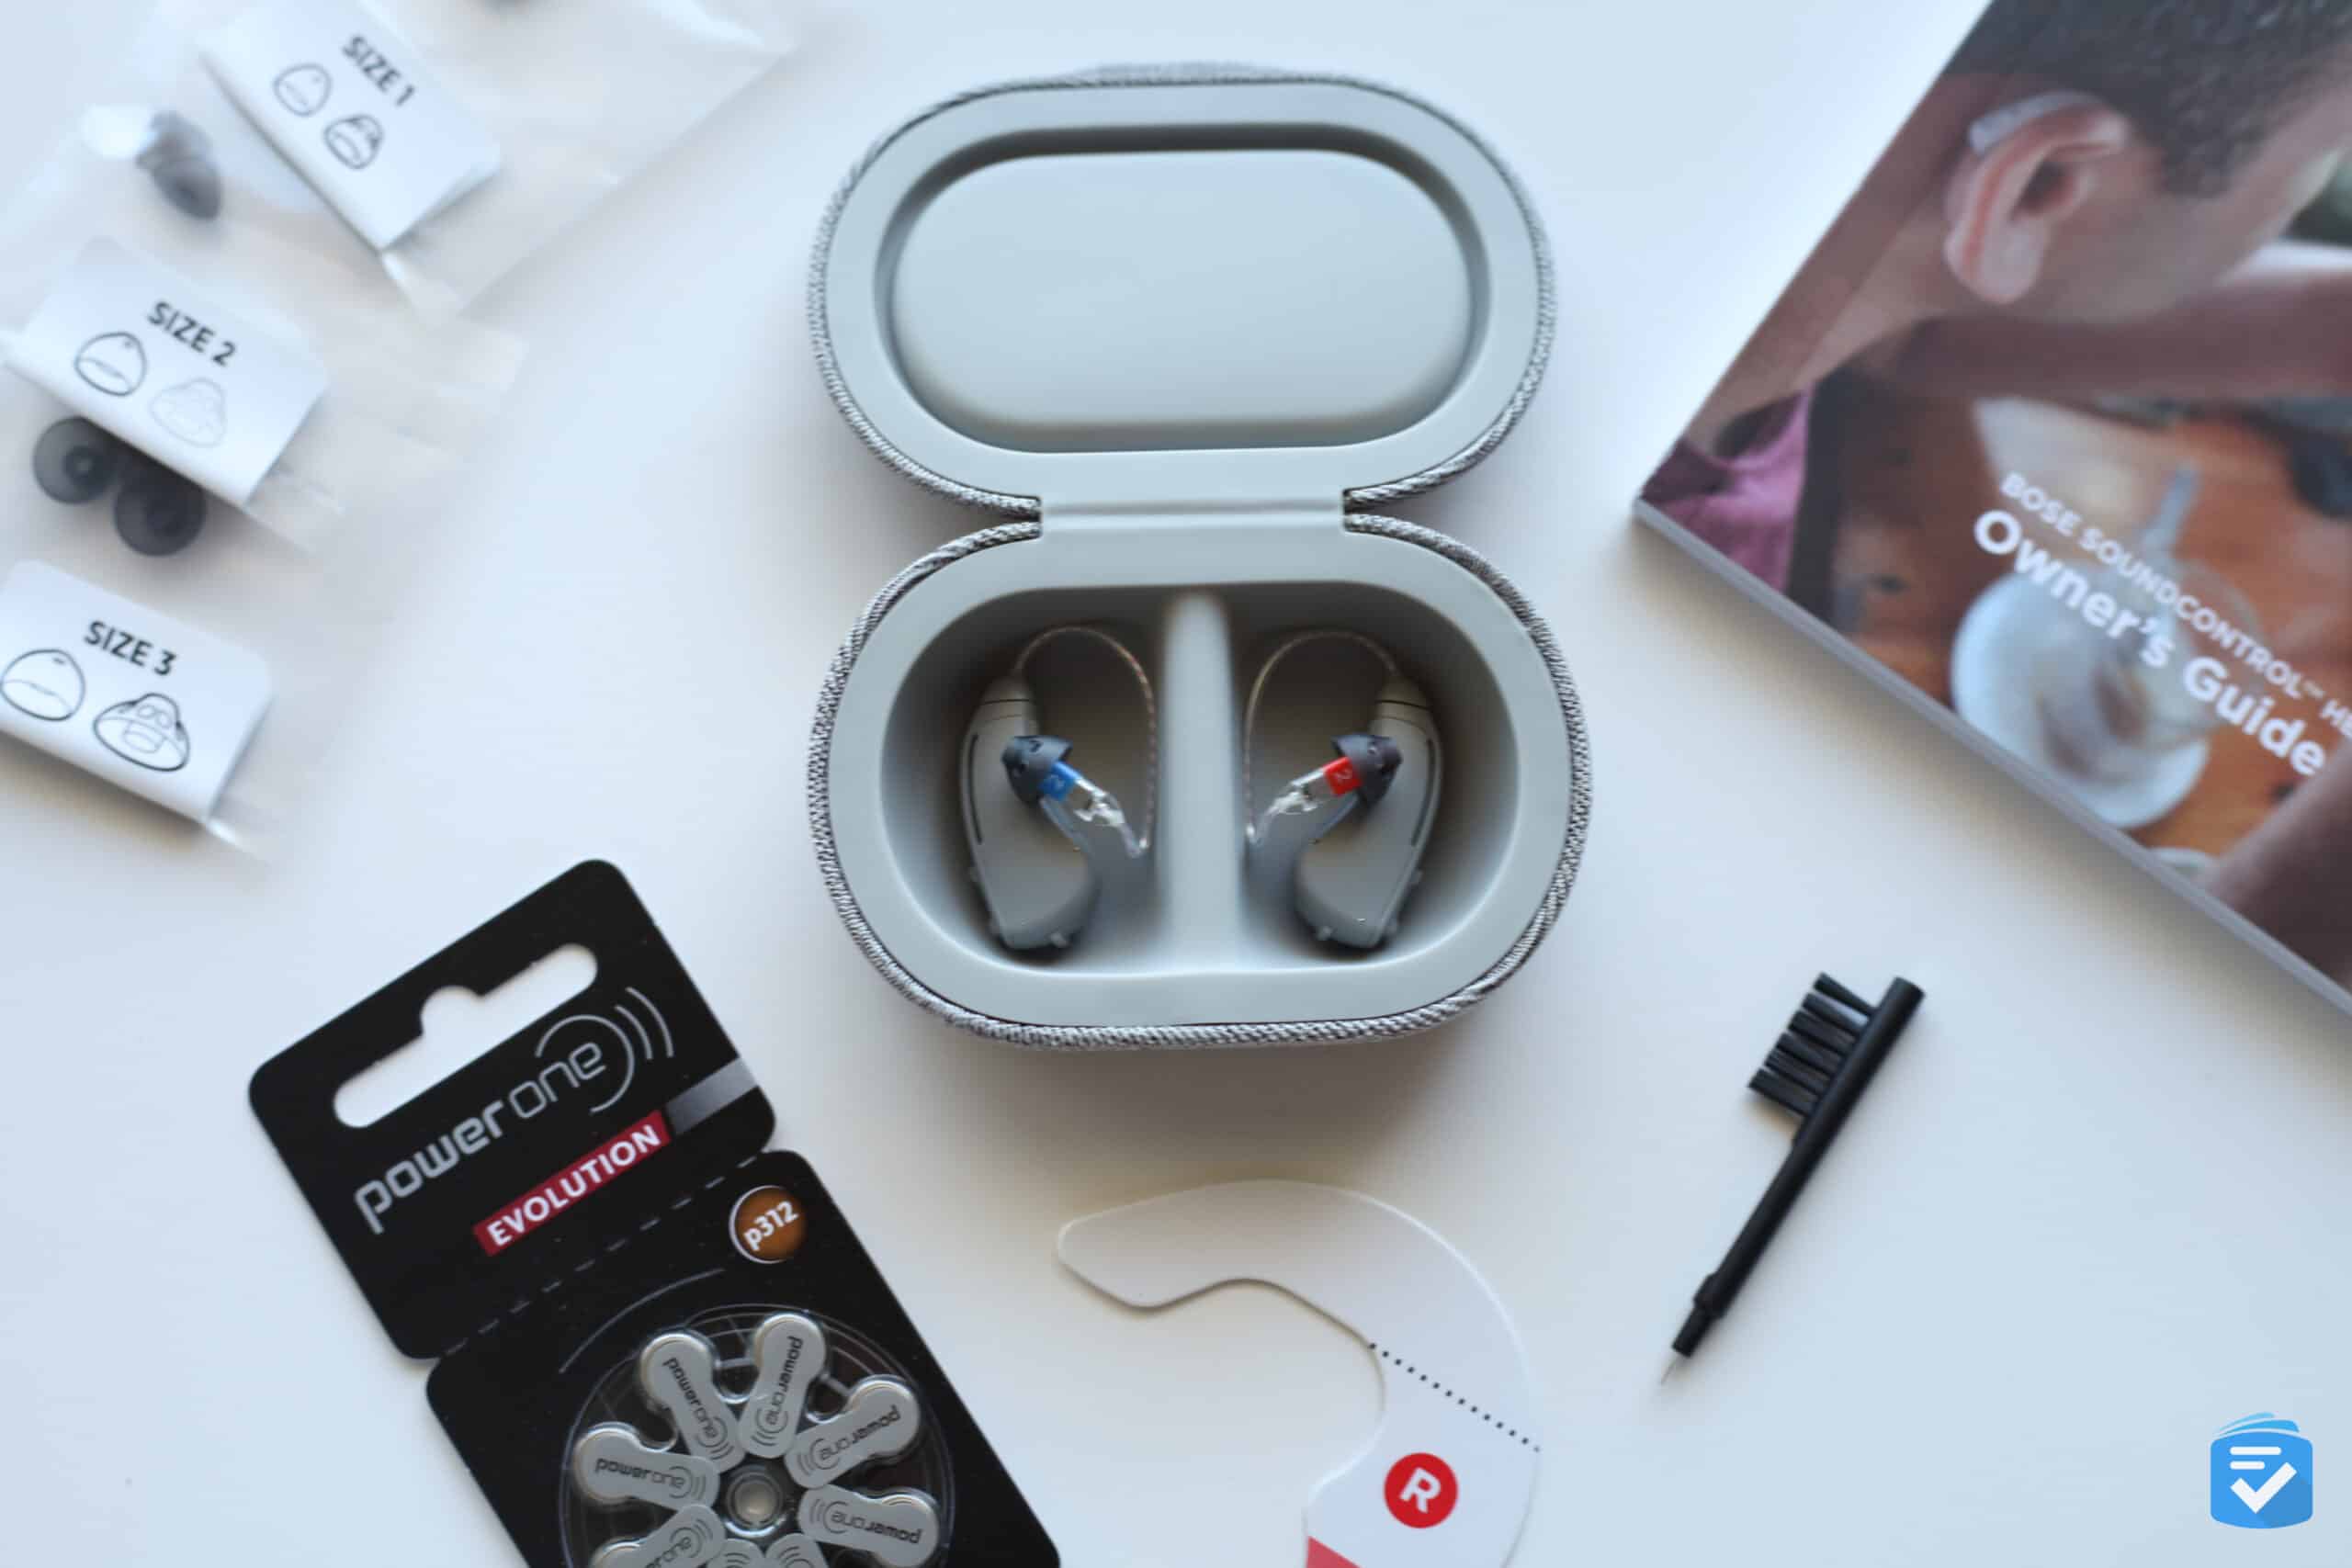 Bose SoundControl Hearing Aids Unpackaging